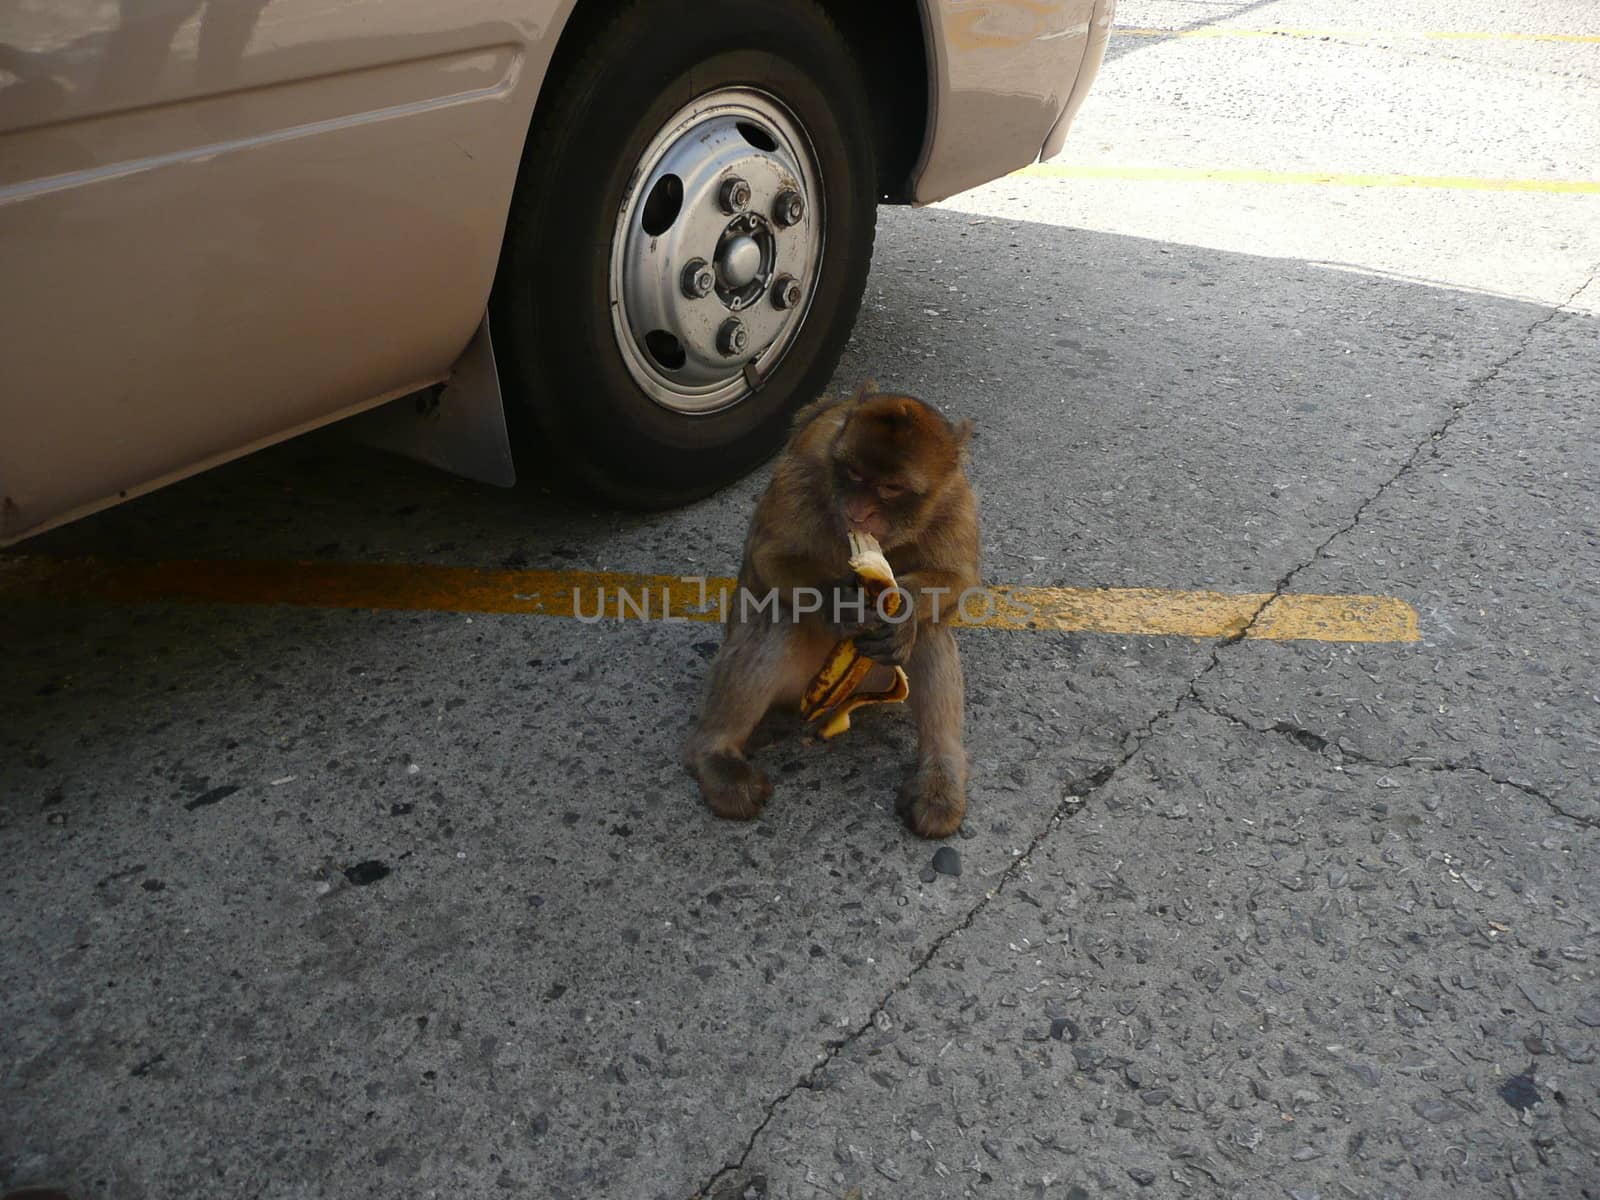 monkey eating banana in the street